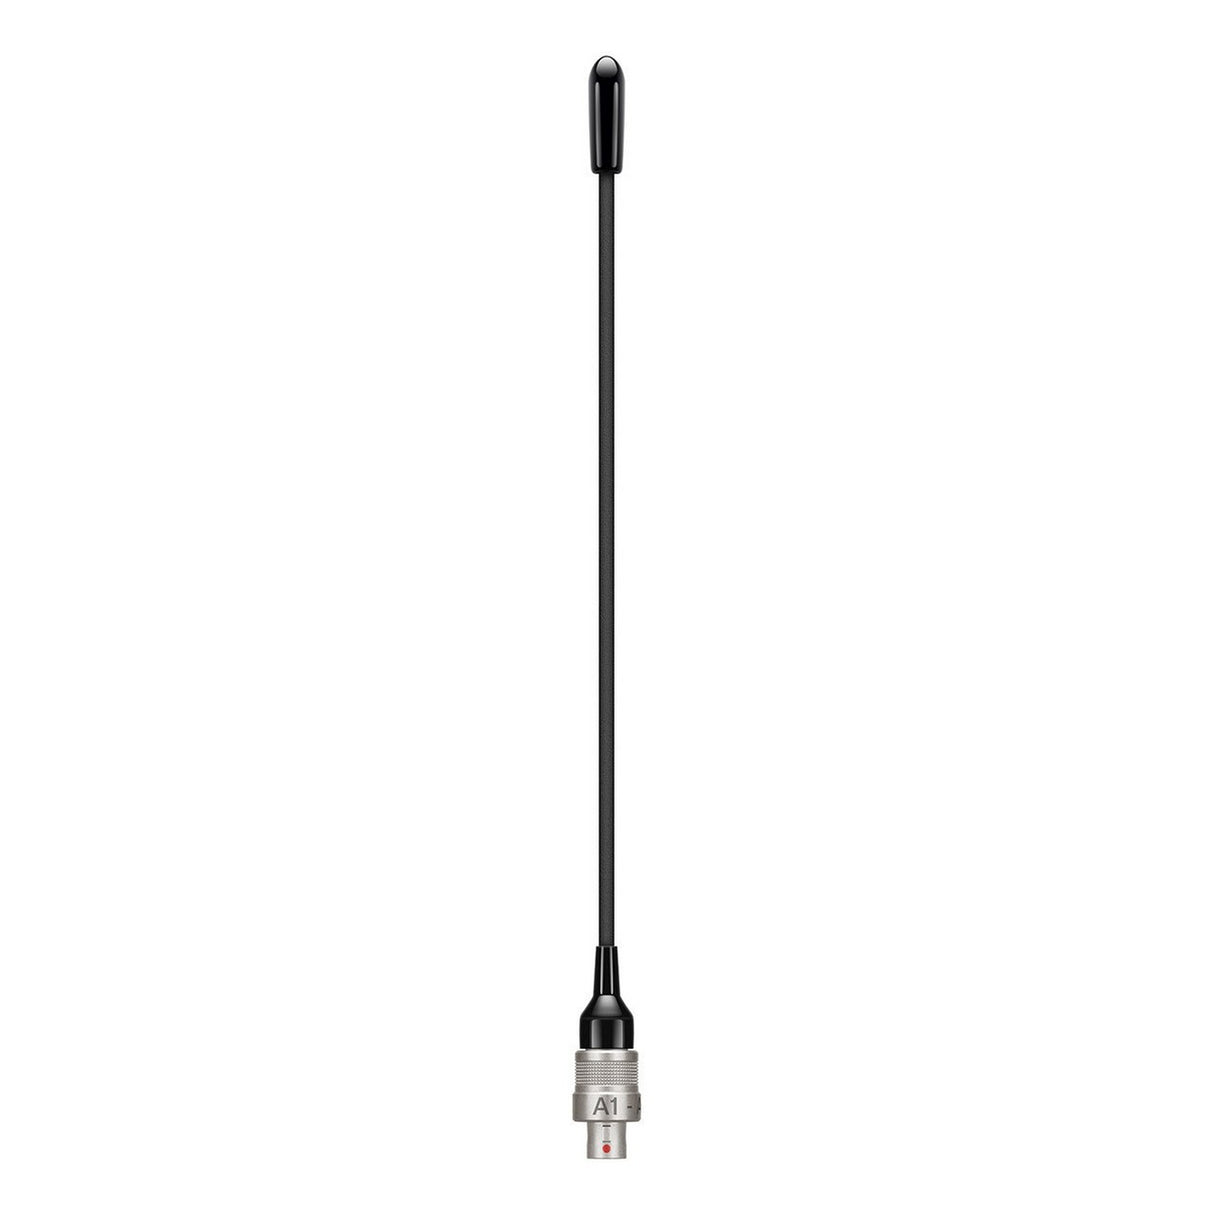 Sennheiser Antenna A1-A4 | Exchangeable Antenna A1-A4 Band with Coaxial Connector